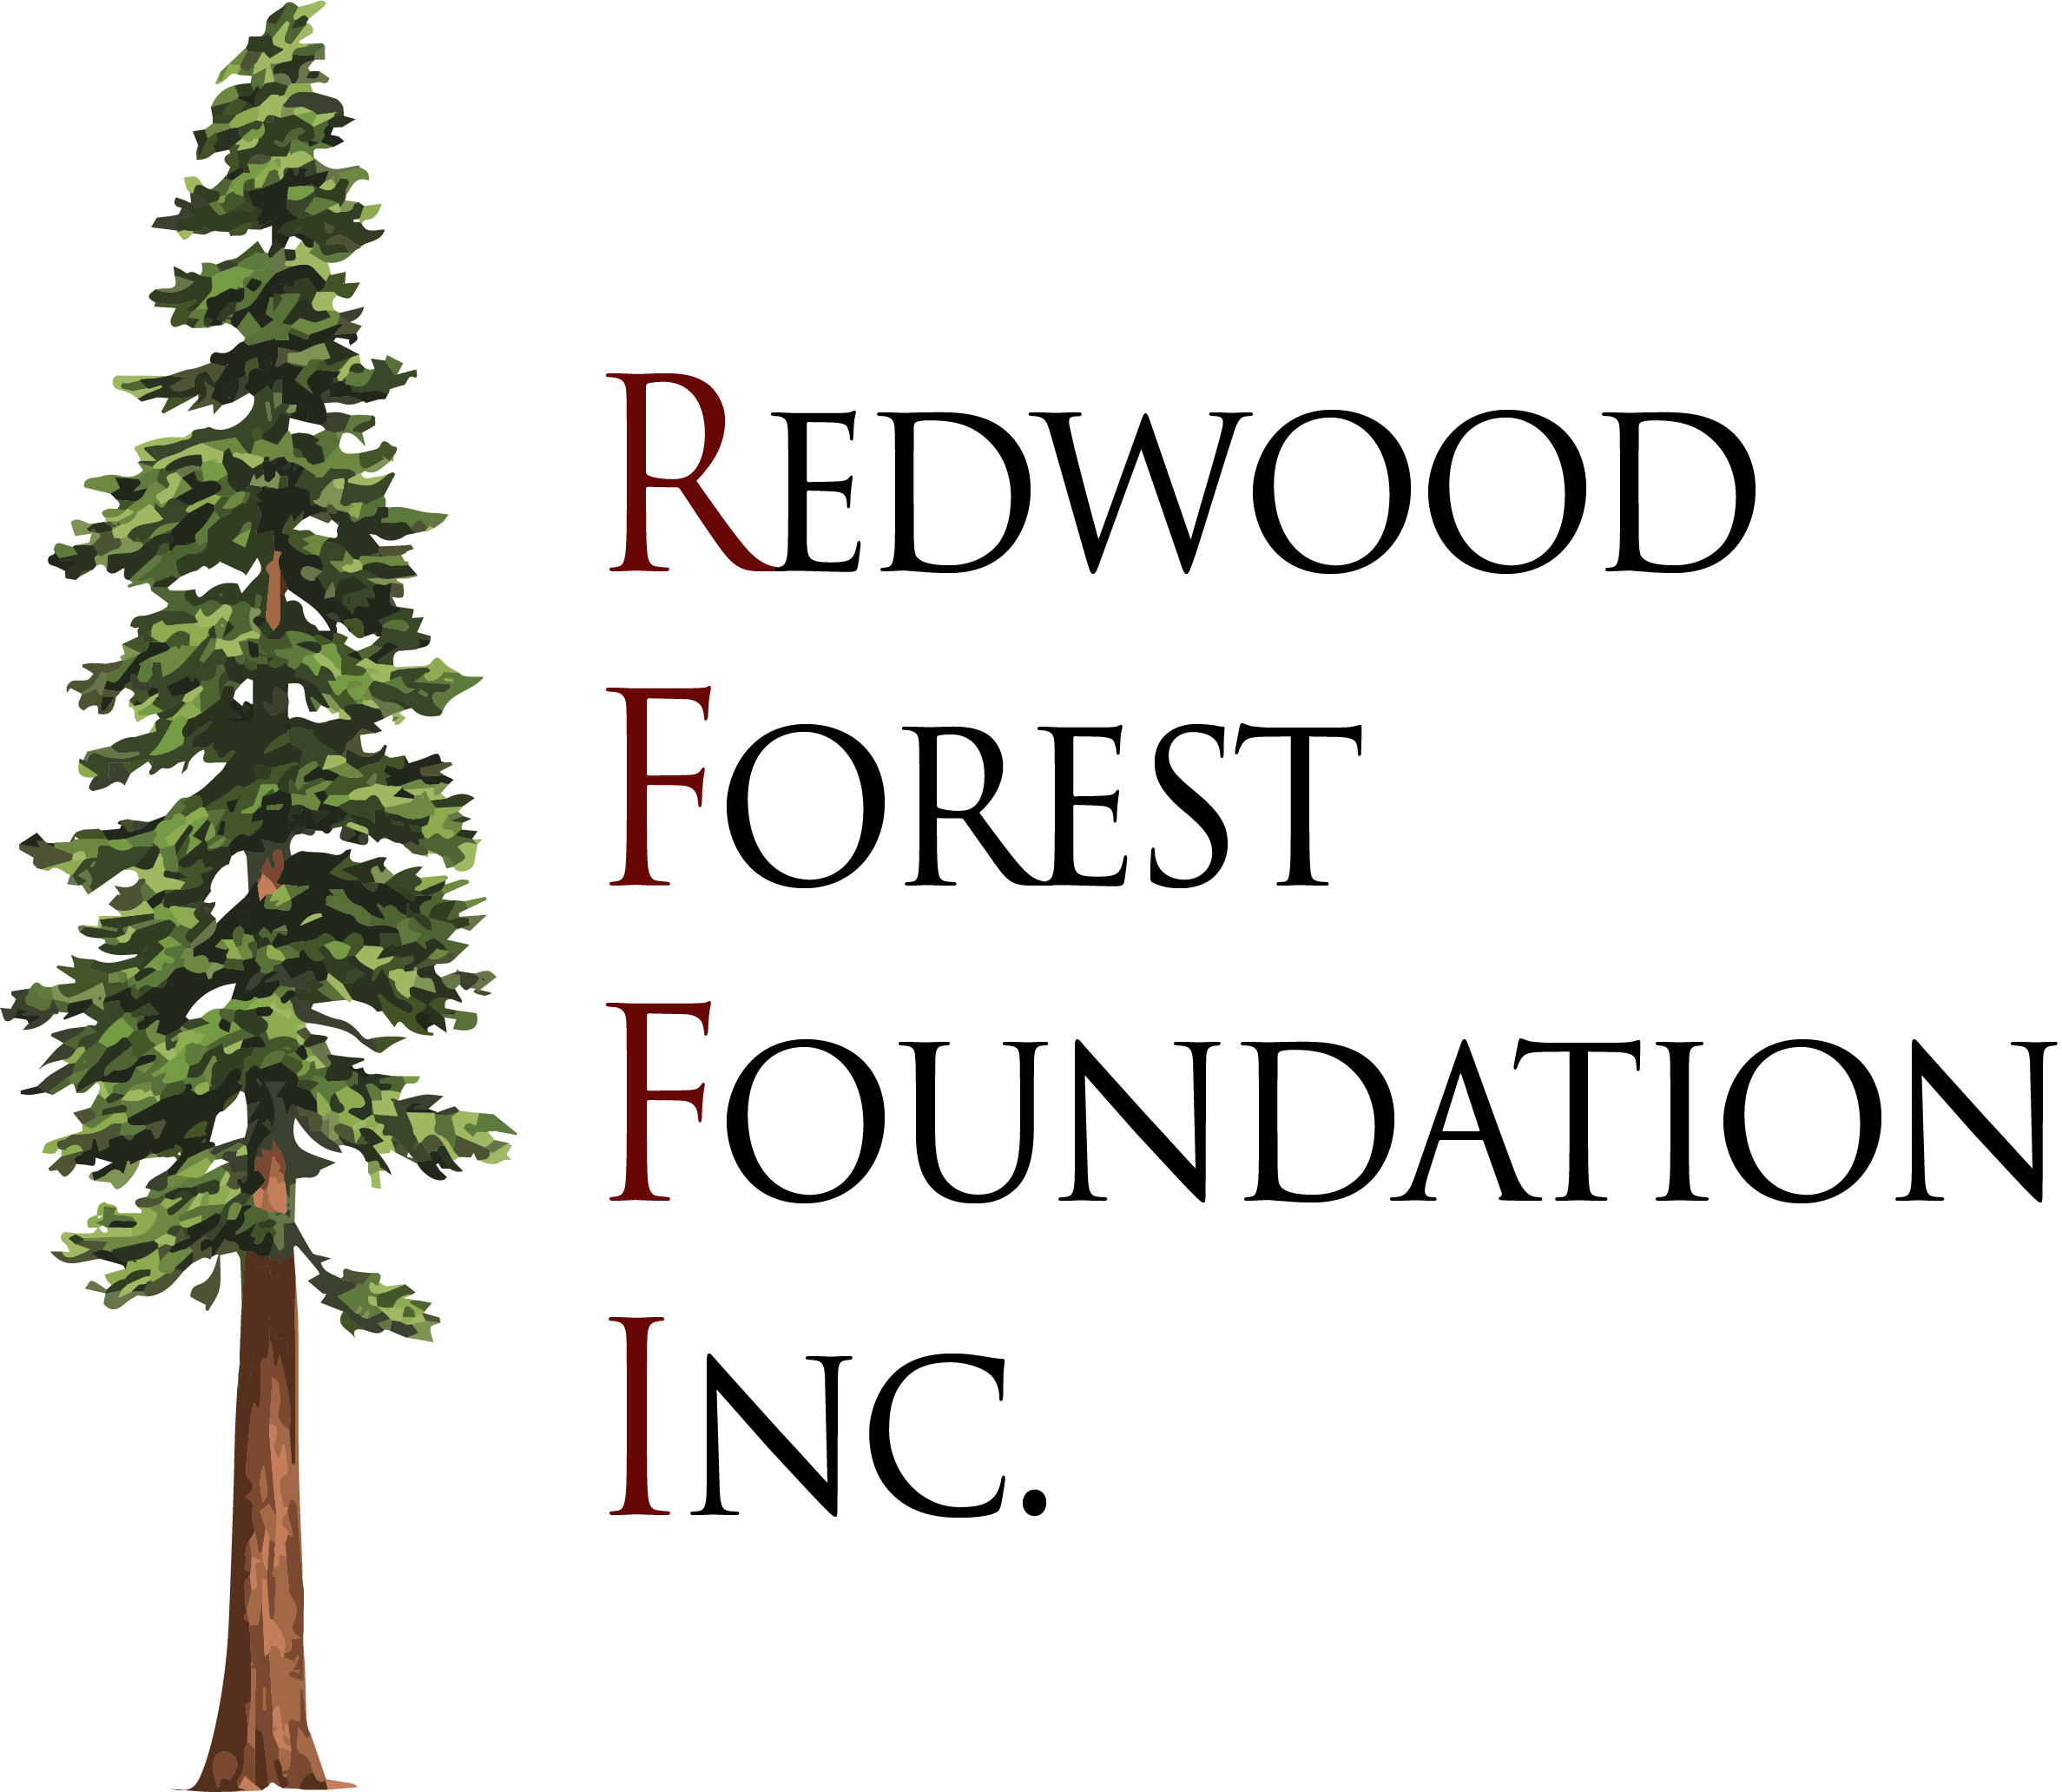 Redwood Forest Foundation Inc. Seeks President & CEO